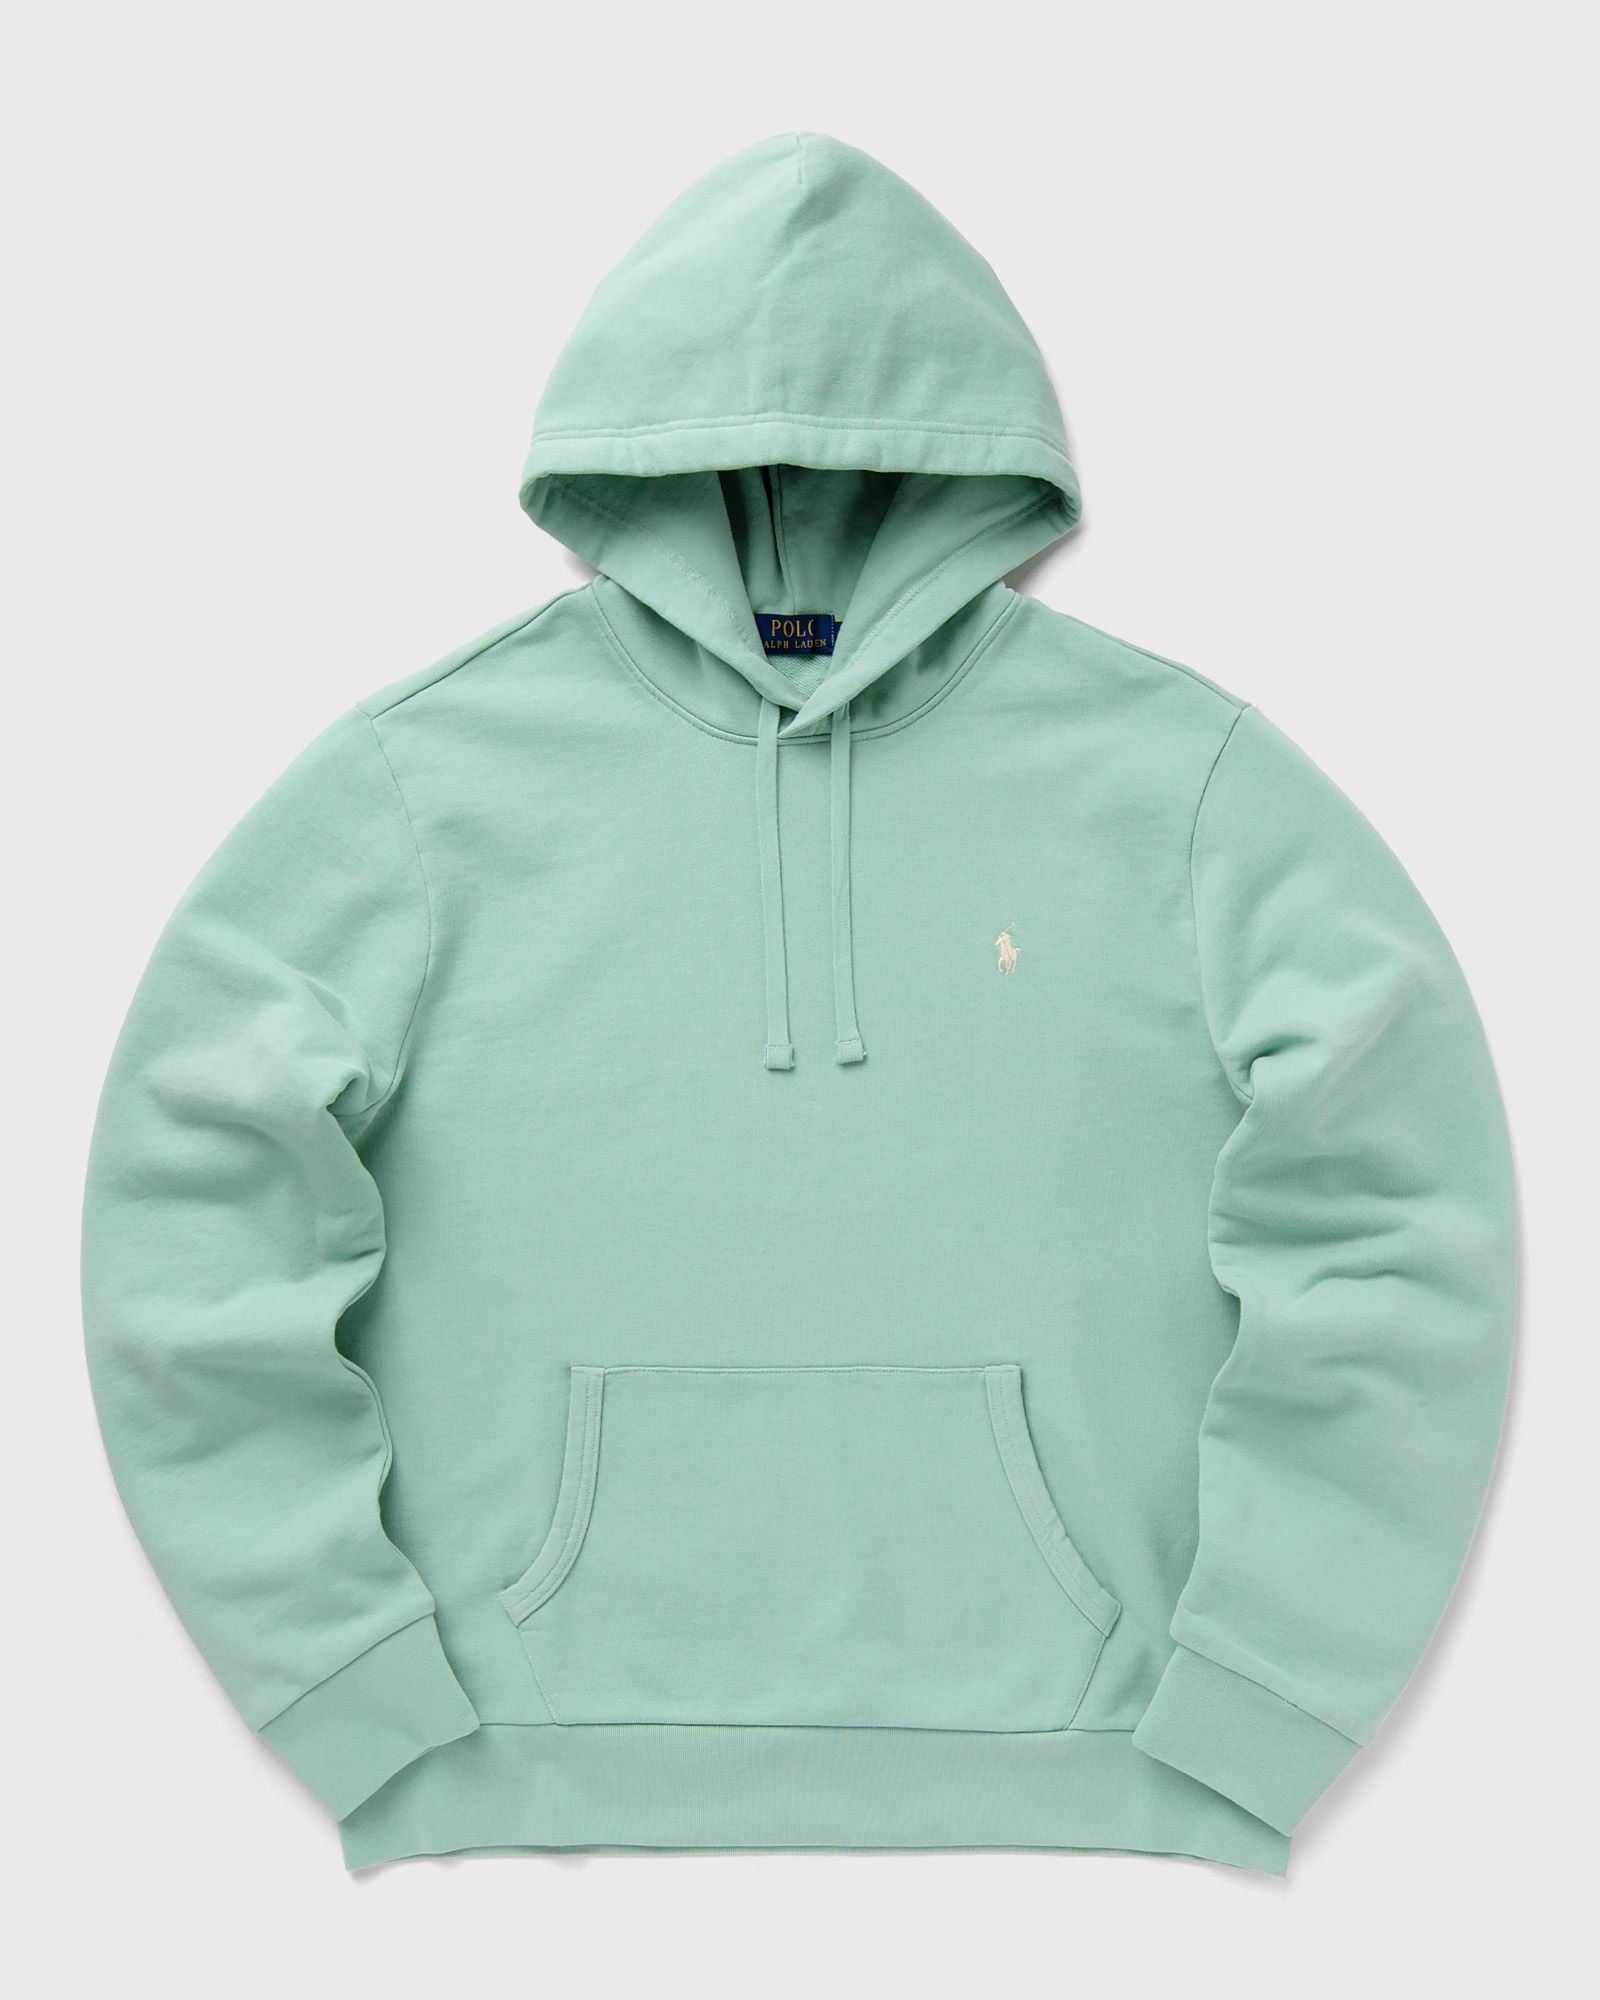 Polo Ralph Lauren - long sleeve-sweatshirt men hoodies green in größe:xl